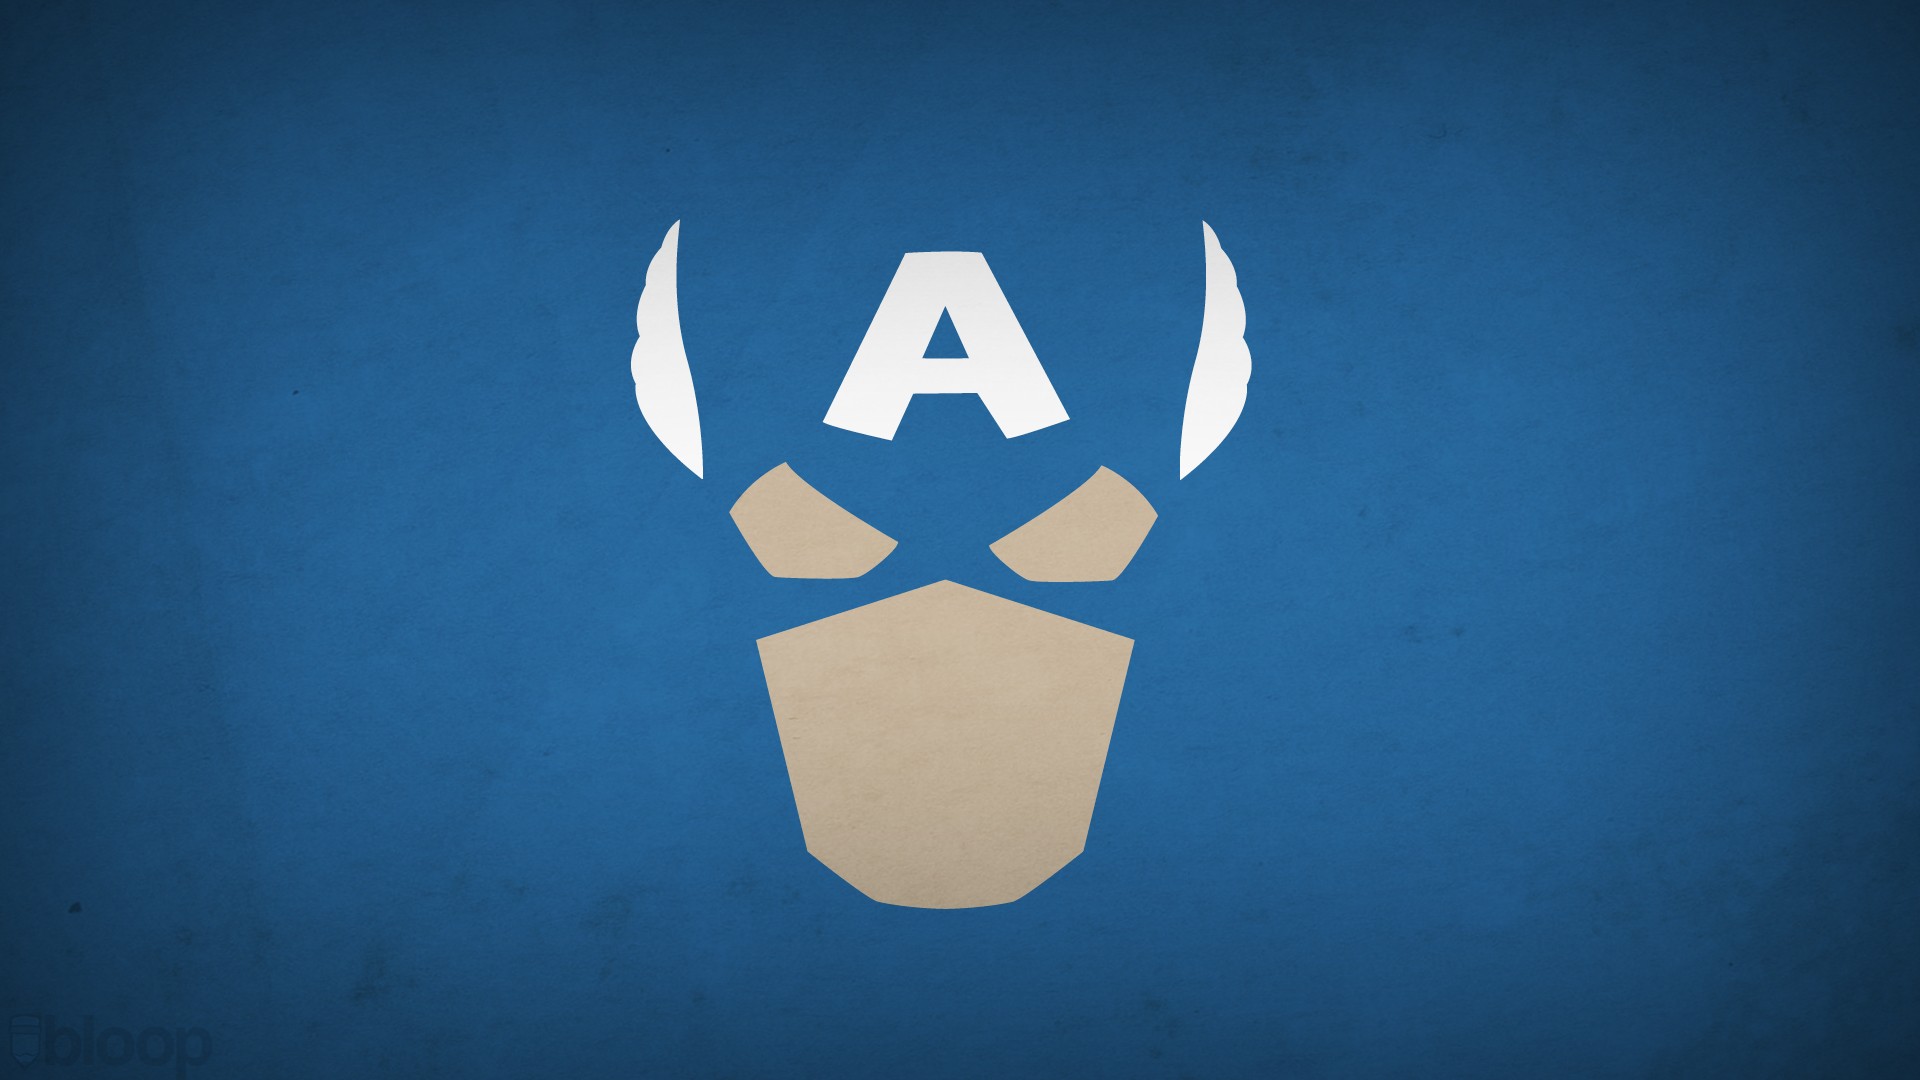 General 1920x1080 Marvel Comics hero Captain America Blo0p superhero minimalism blue background